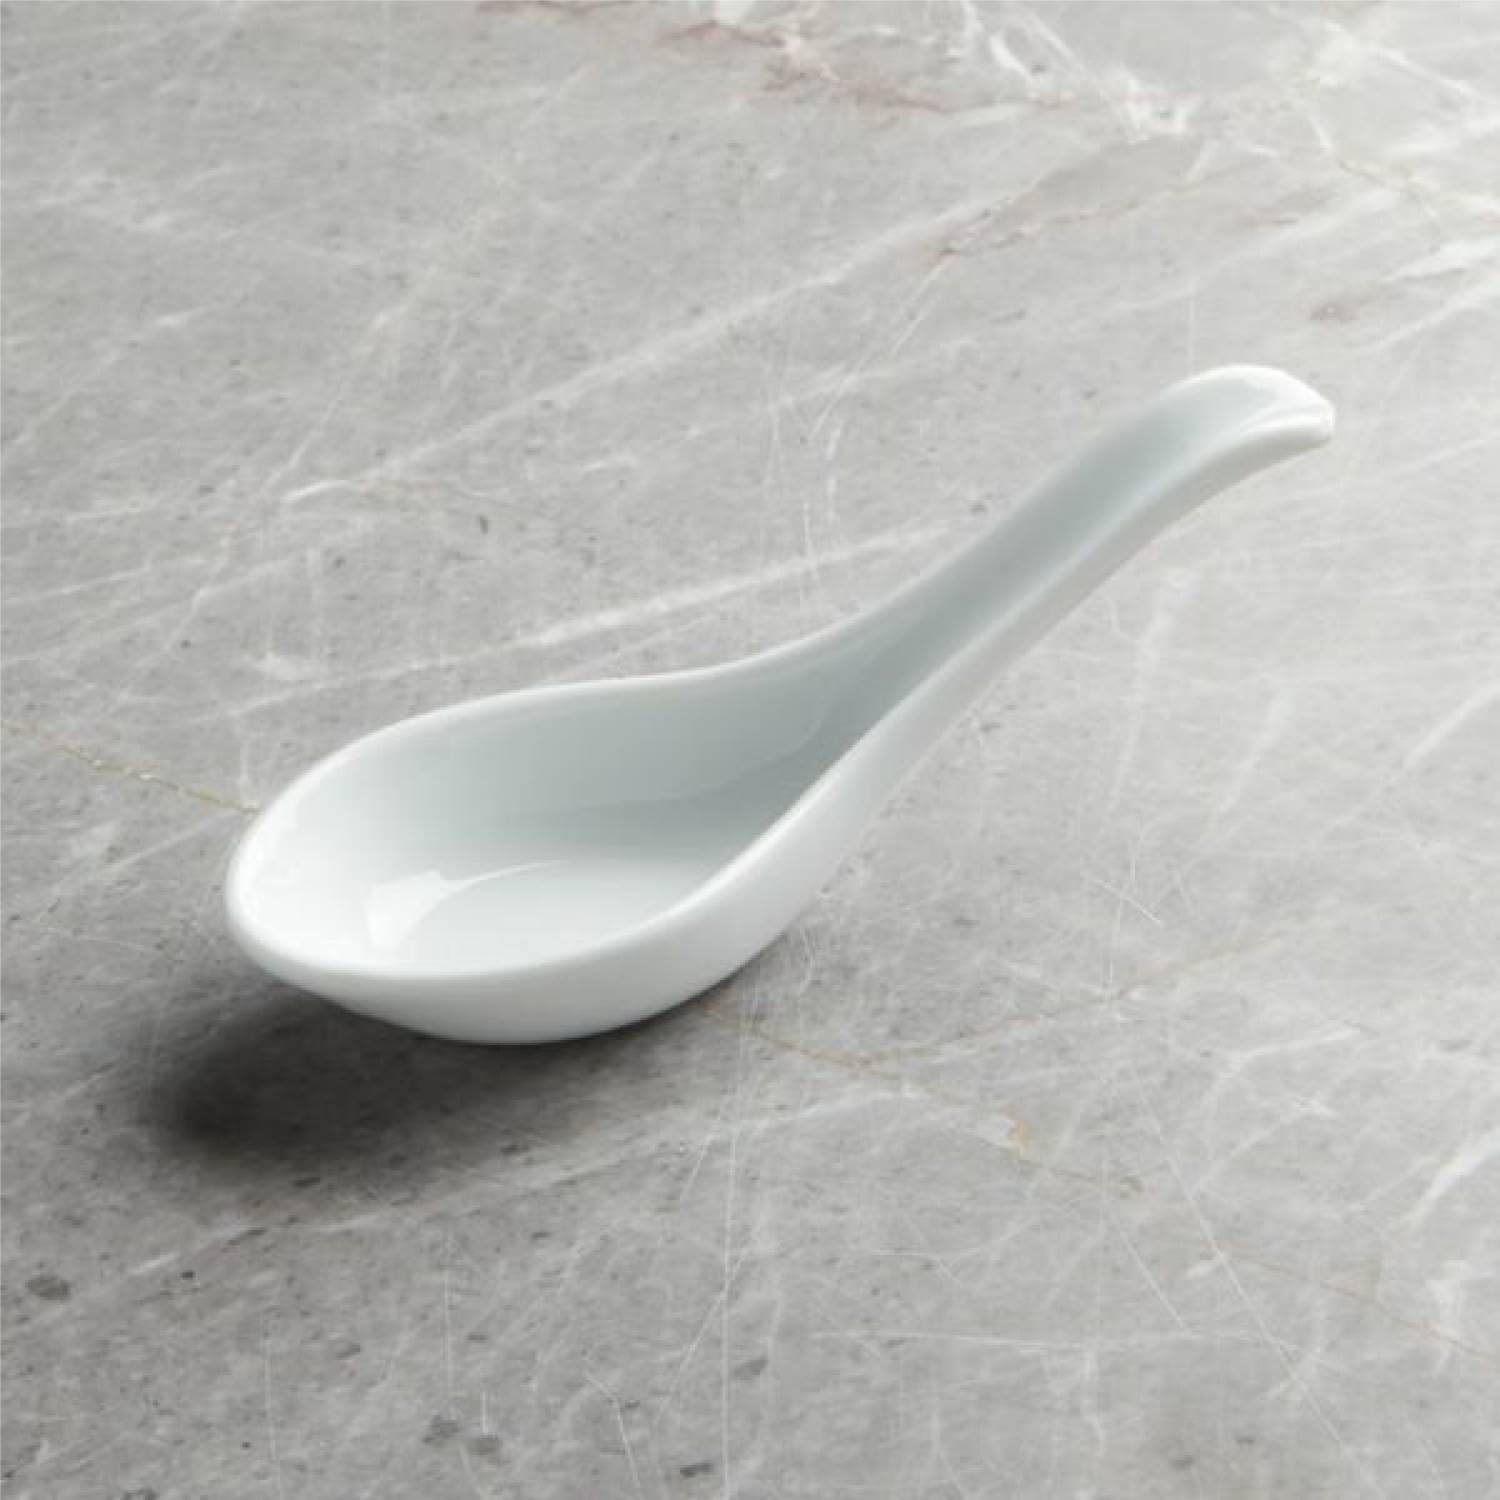 Baralee Simple Plus Soup Spoon